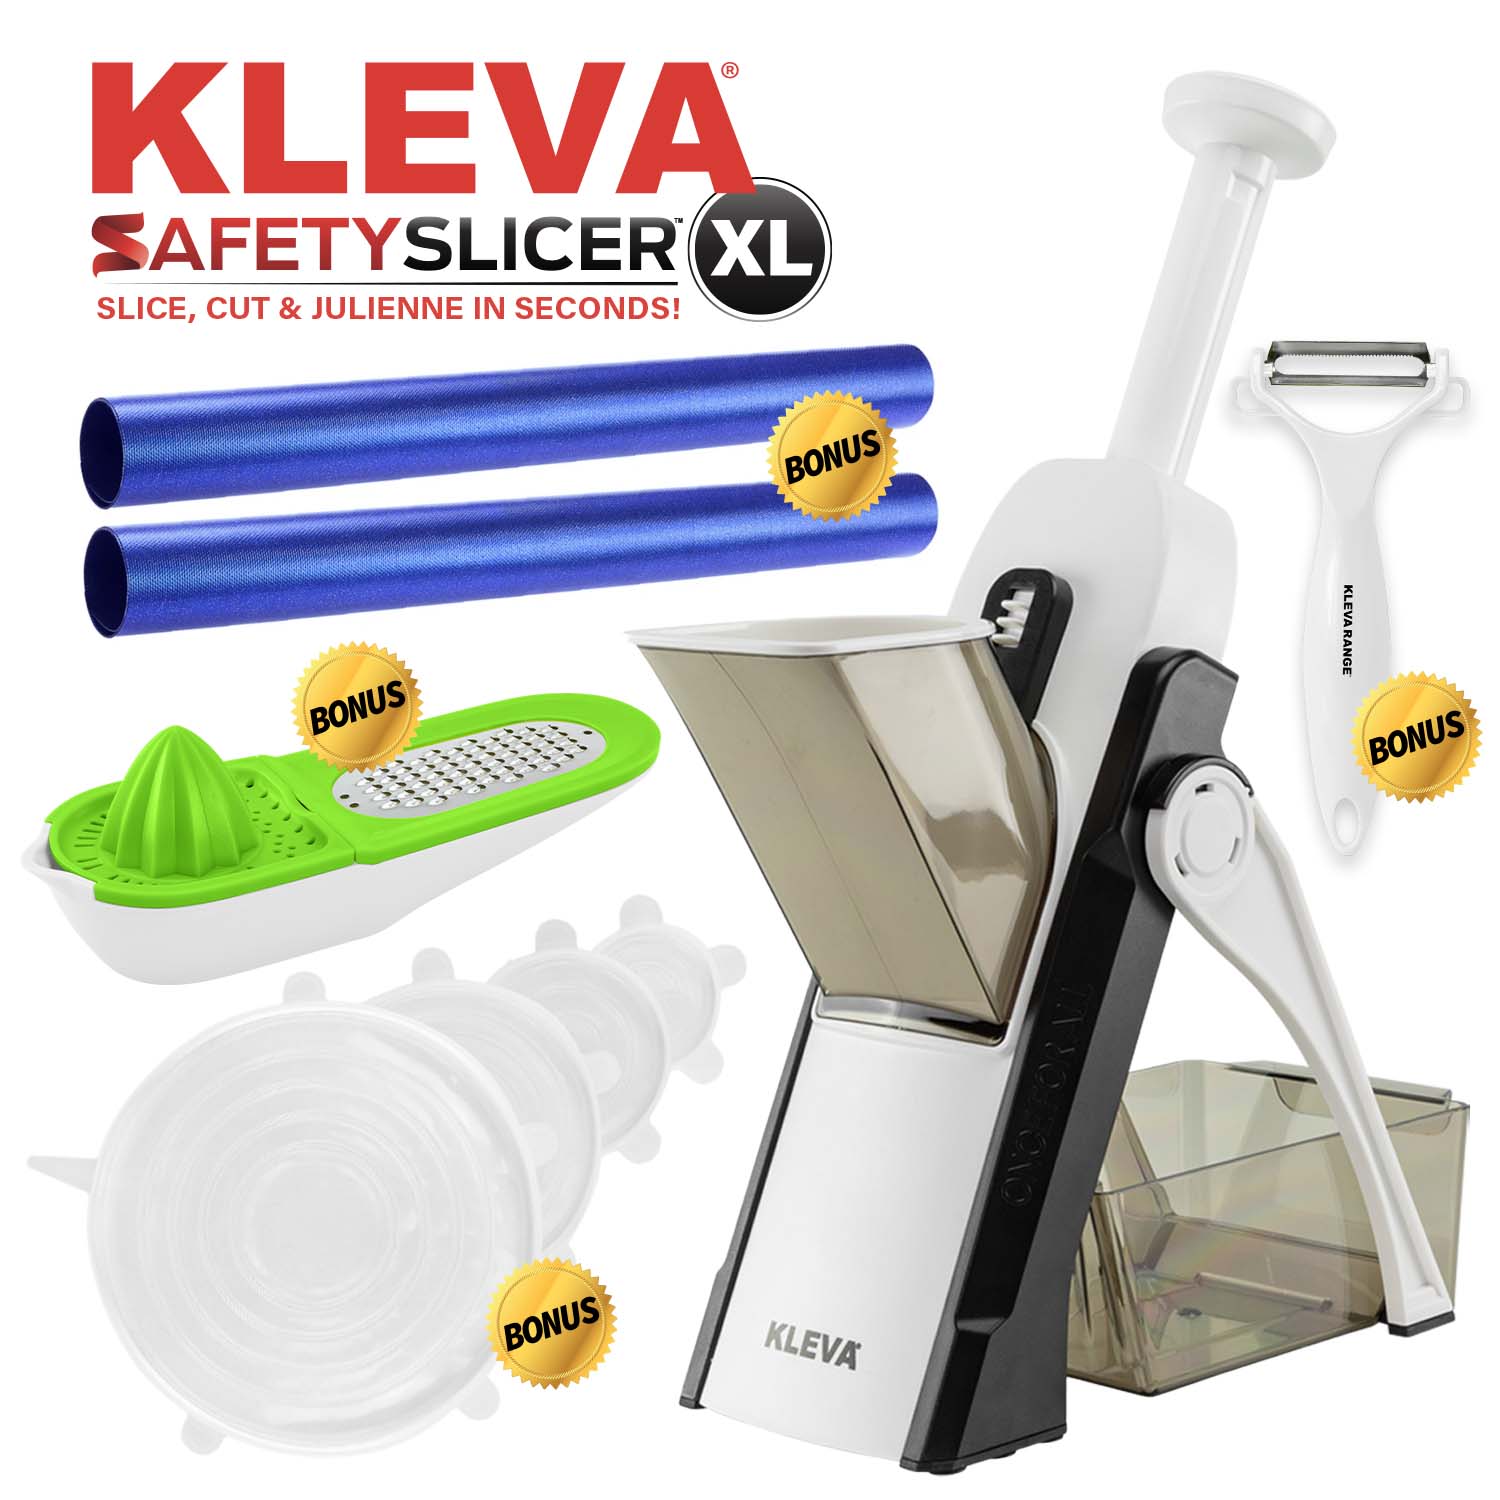 Second Kleva Safety Slicer™️ XL TV Deal + Over $90 FREE Gifts! UPSELL Kleva Range - Everyday Innovations   